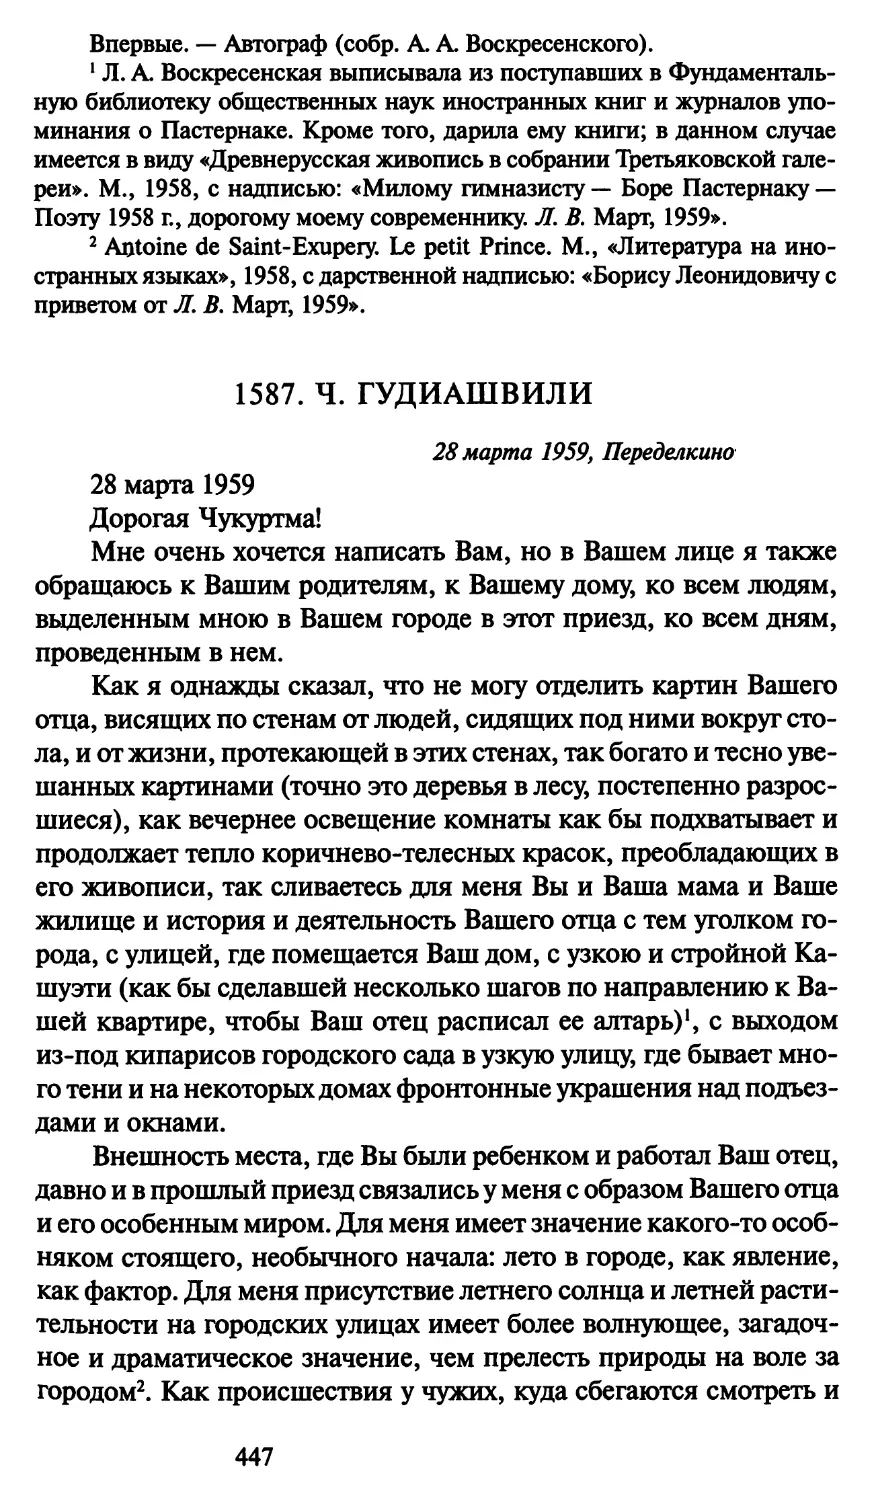 1587. Ч. Гудиашвили 28 марта 1959